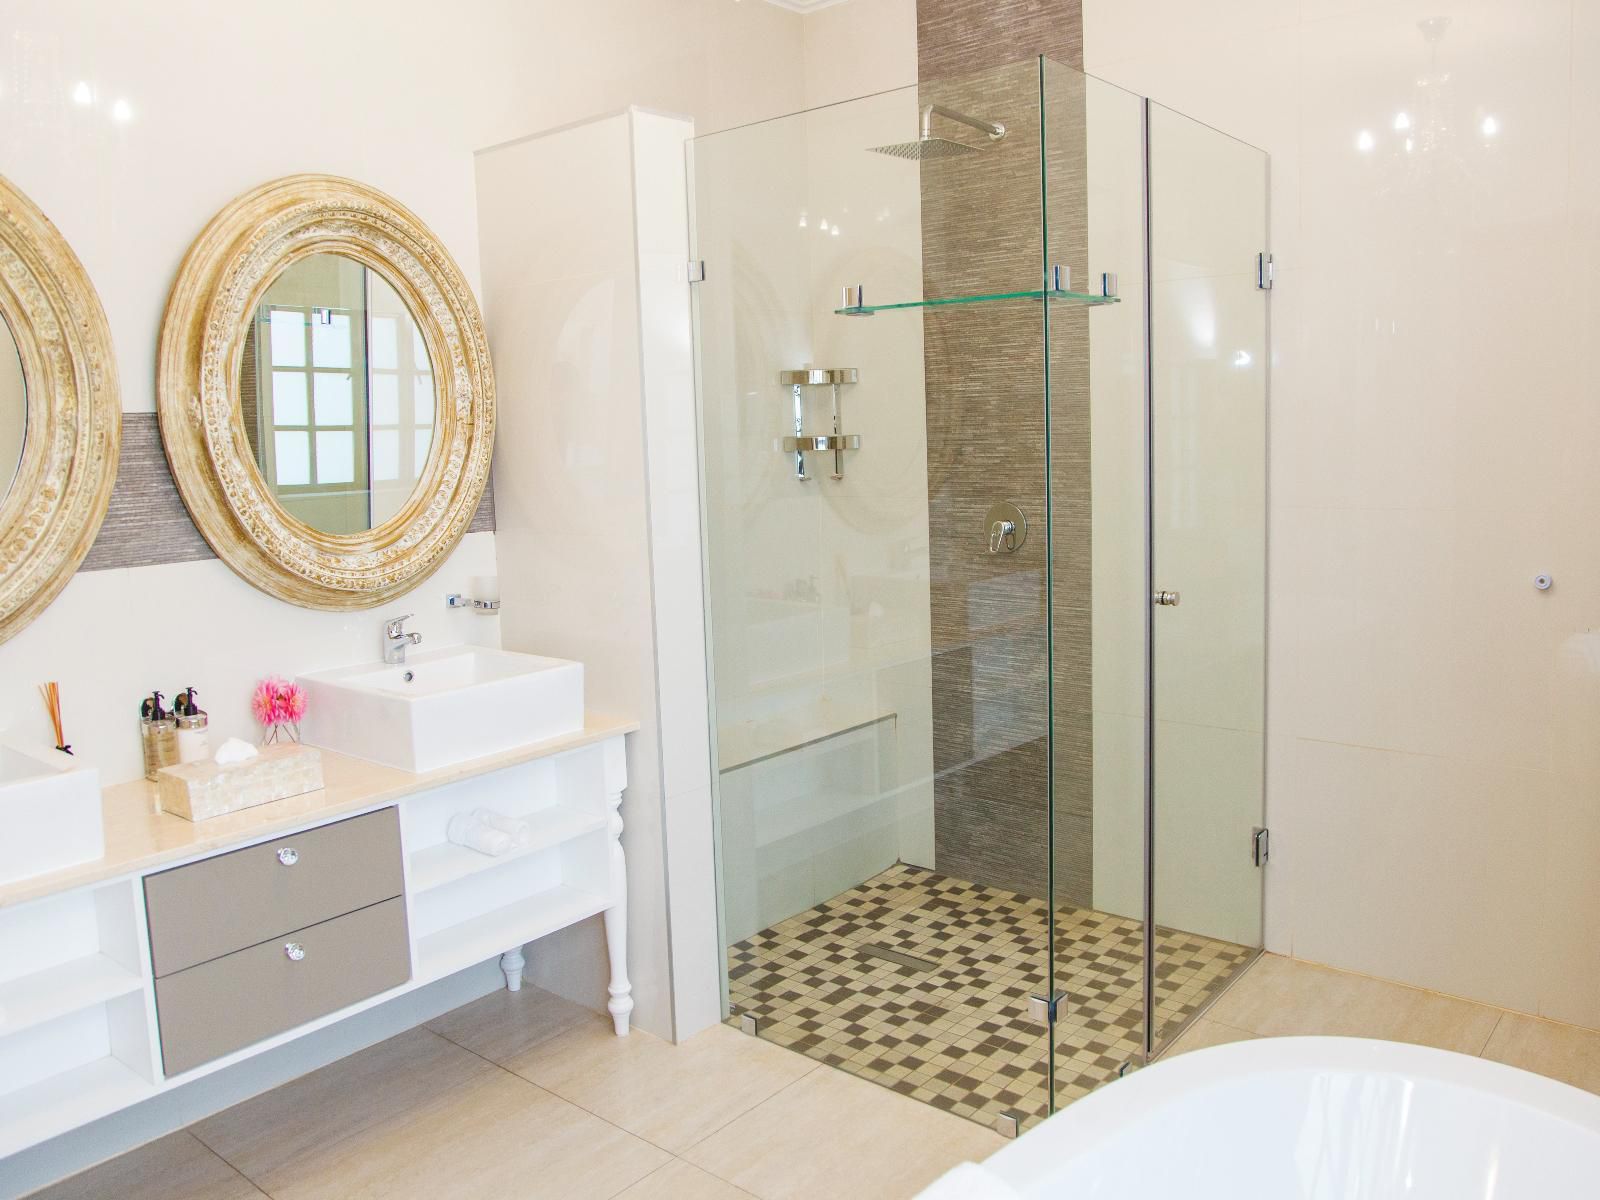 Ivory Manor Boutique Hotel Rietvalleipark Pretoria Tshwane Gauteng South Africa Bathroom